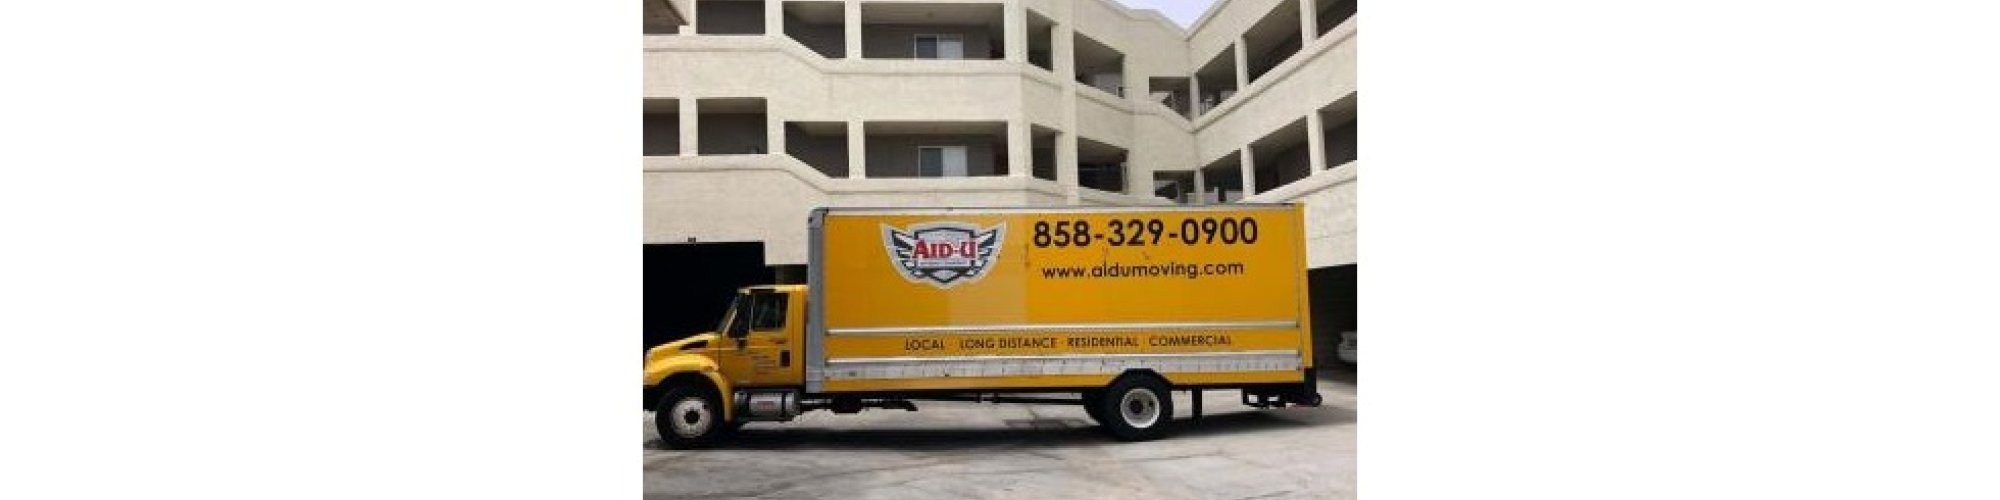 Aid-U Moving Company